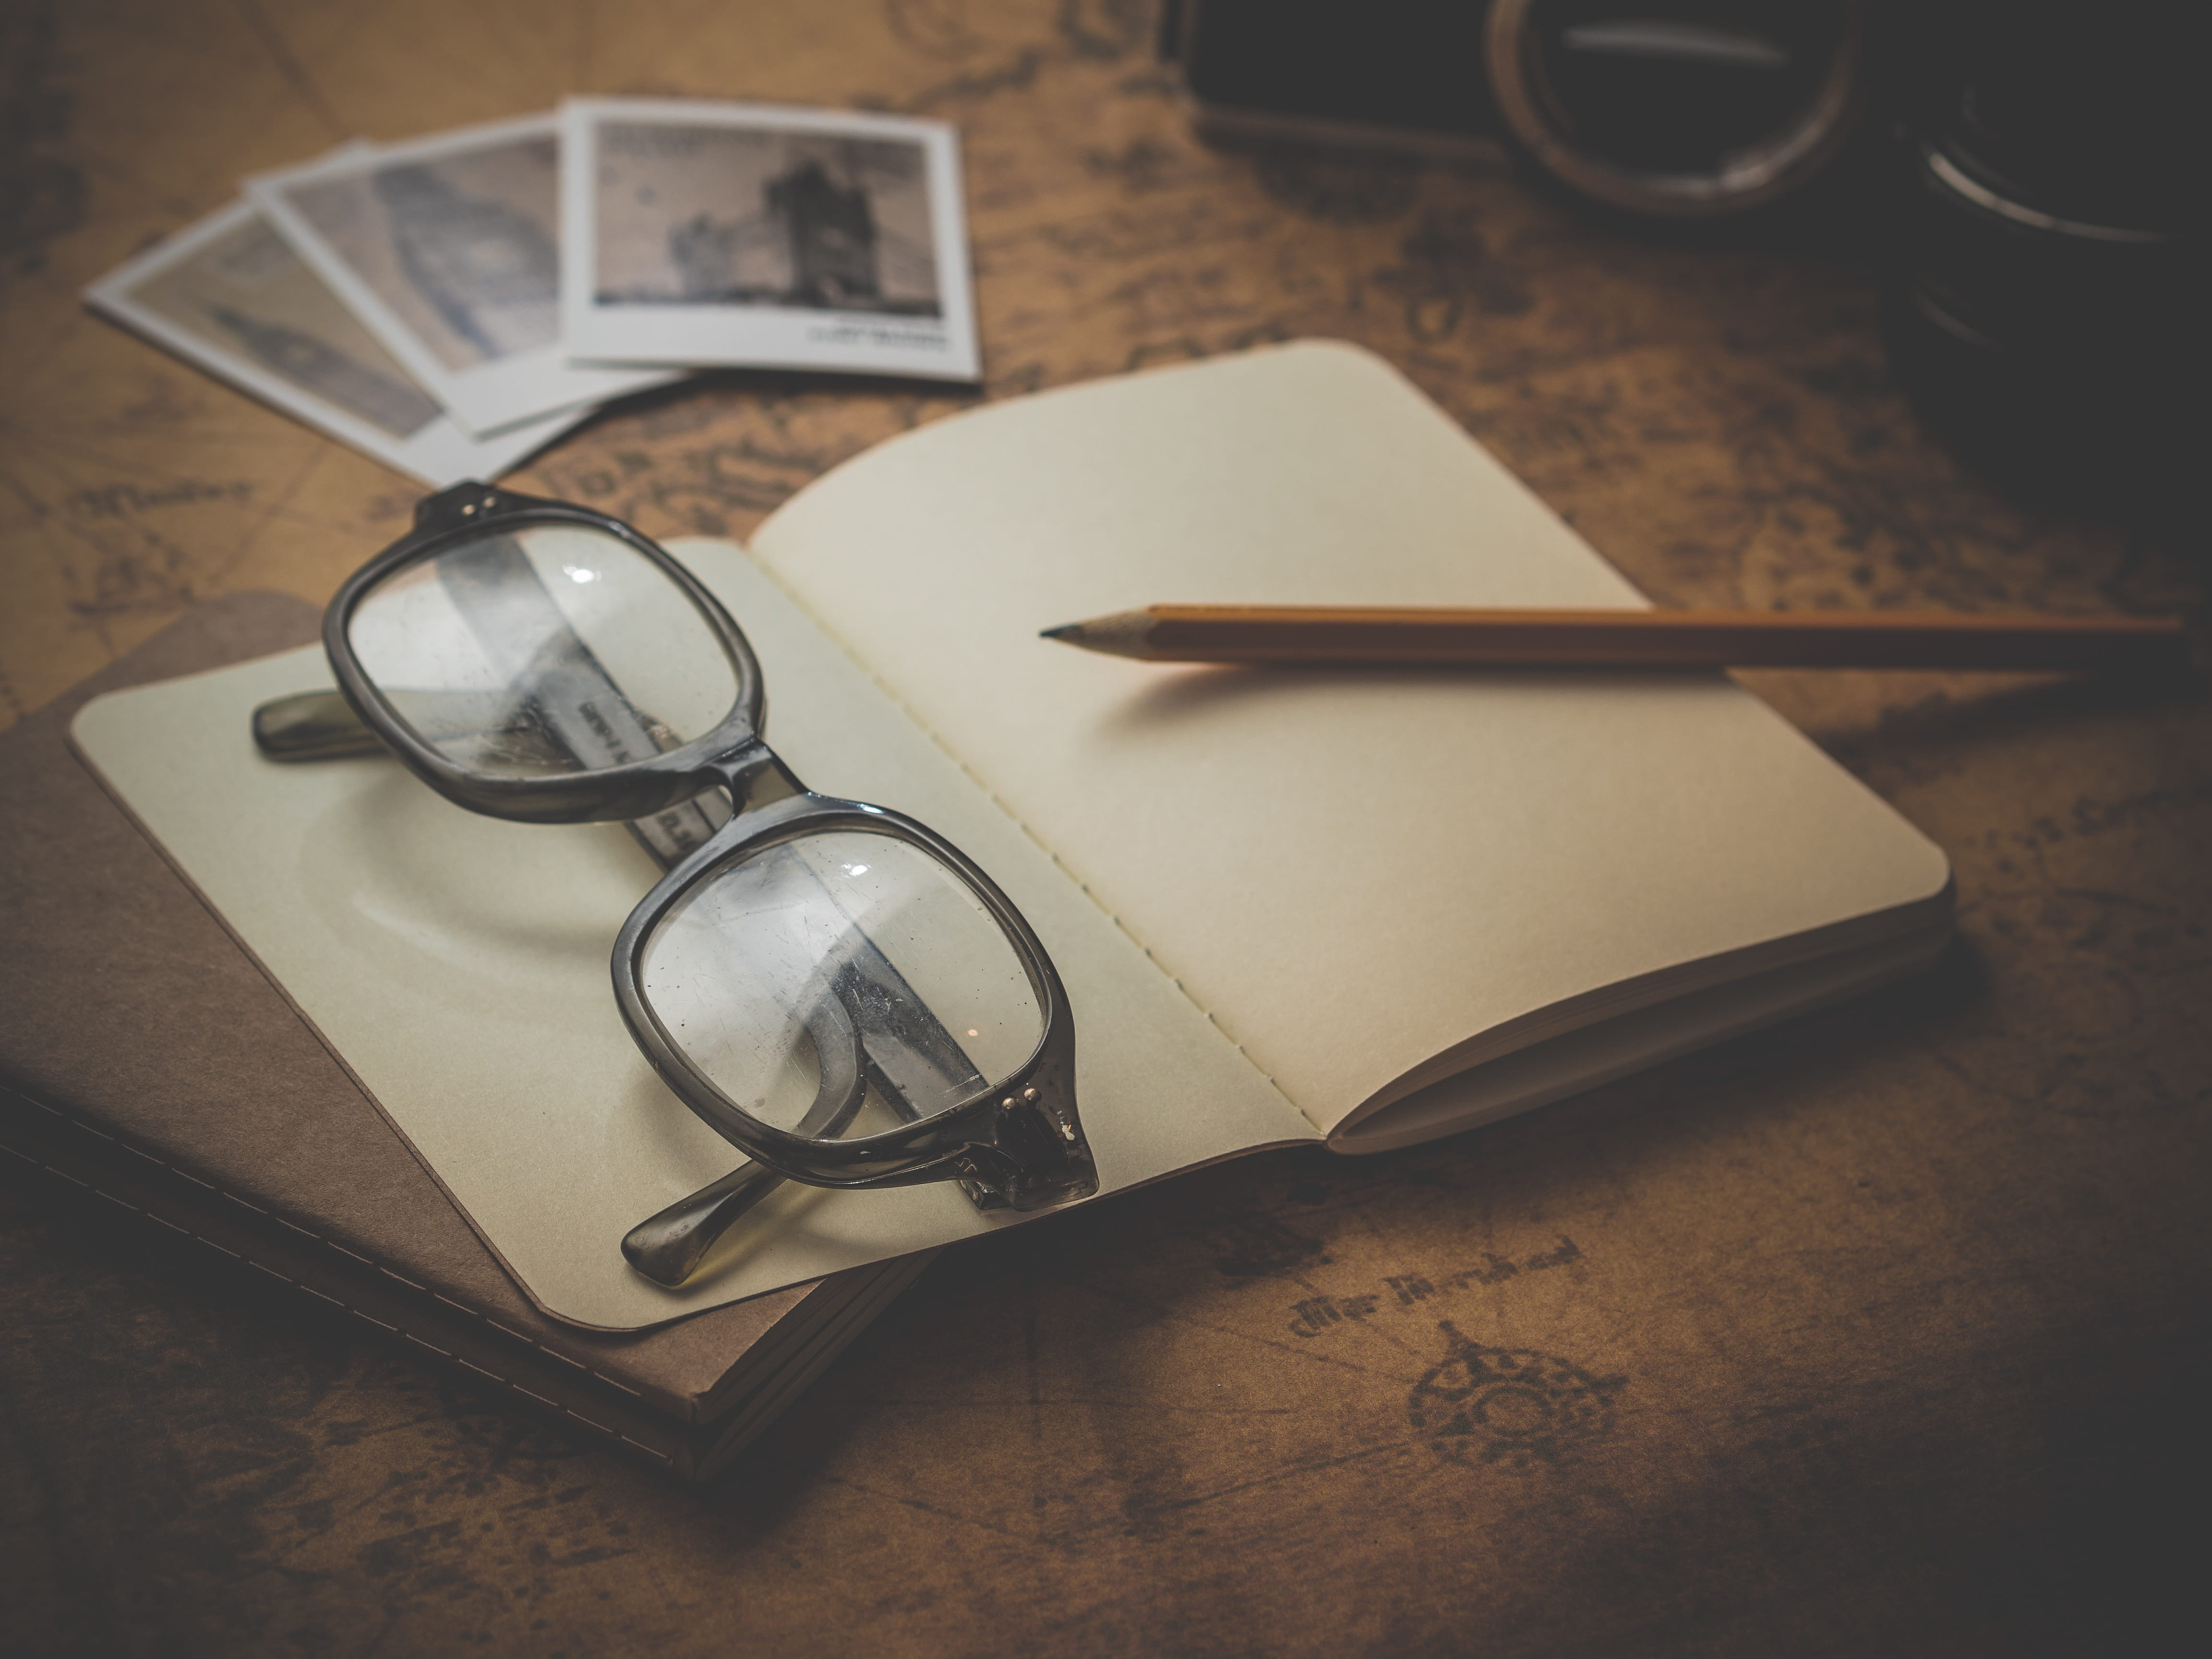 Eyeglasses on Book, antique, blank, blur, camera, classic, close-up